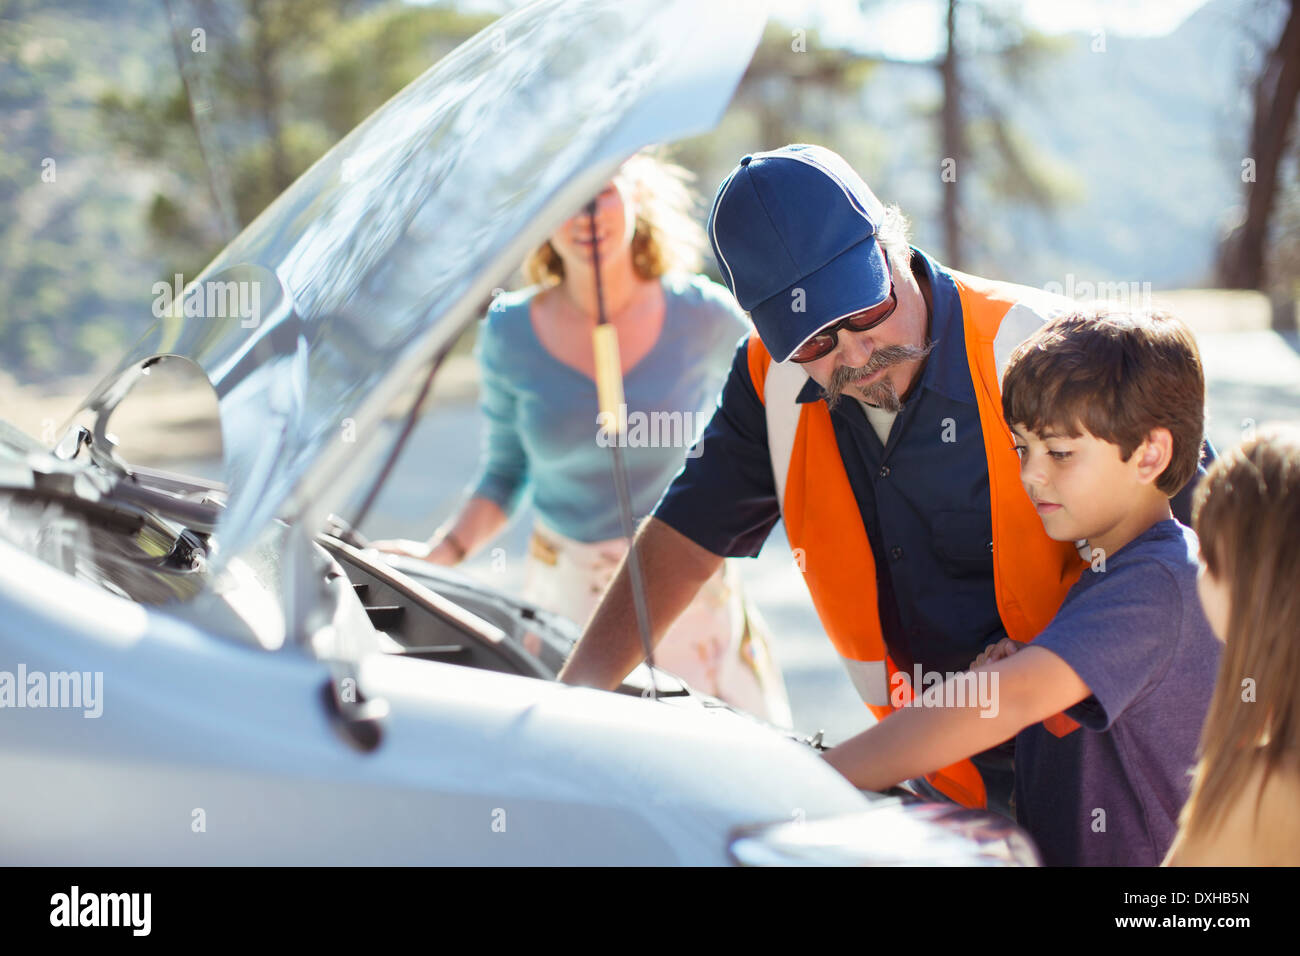 Boy watching roadside mechanic check car engine Stock Photo